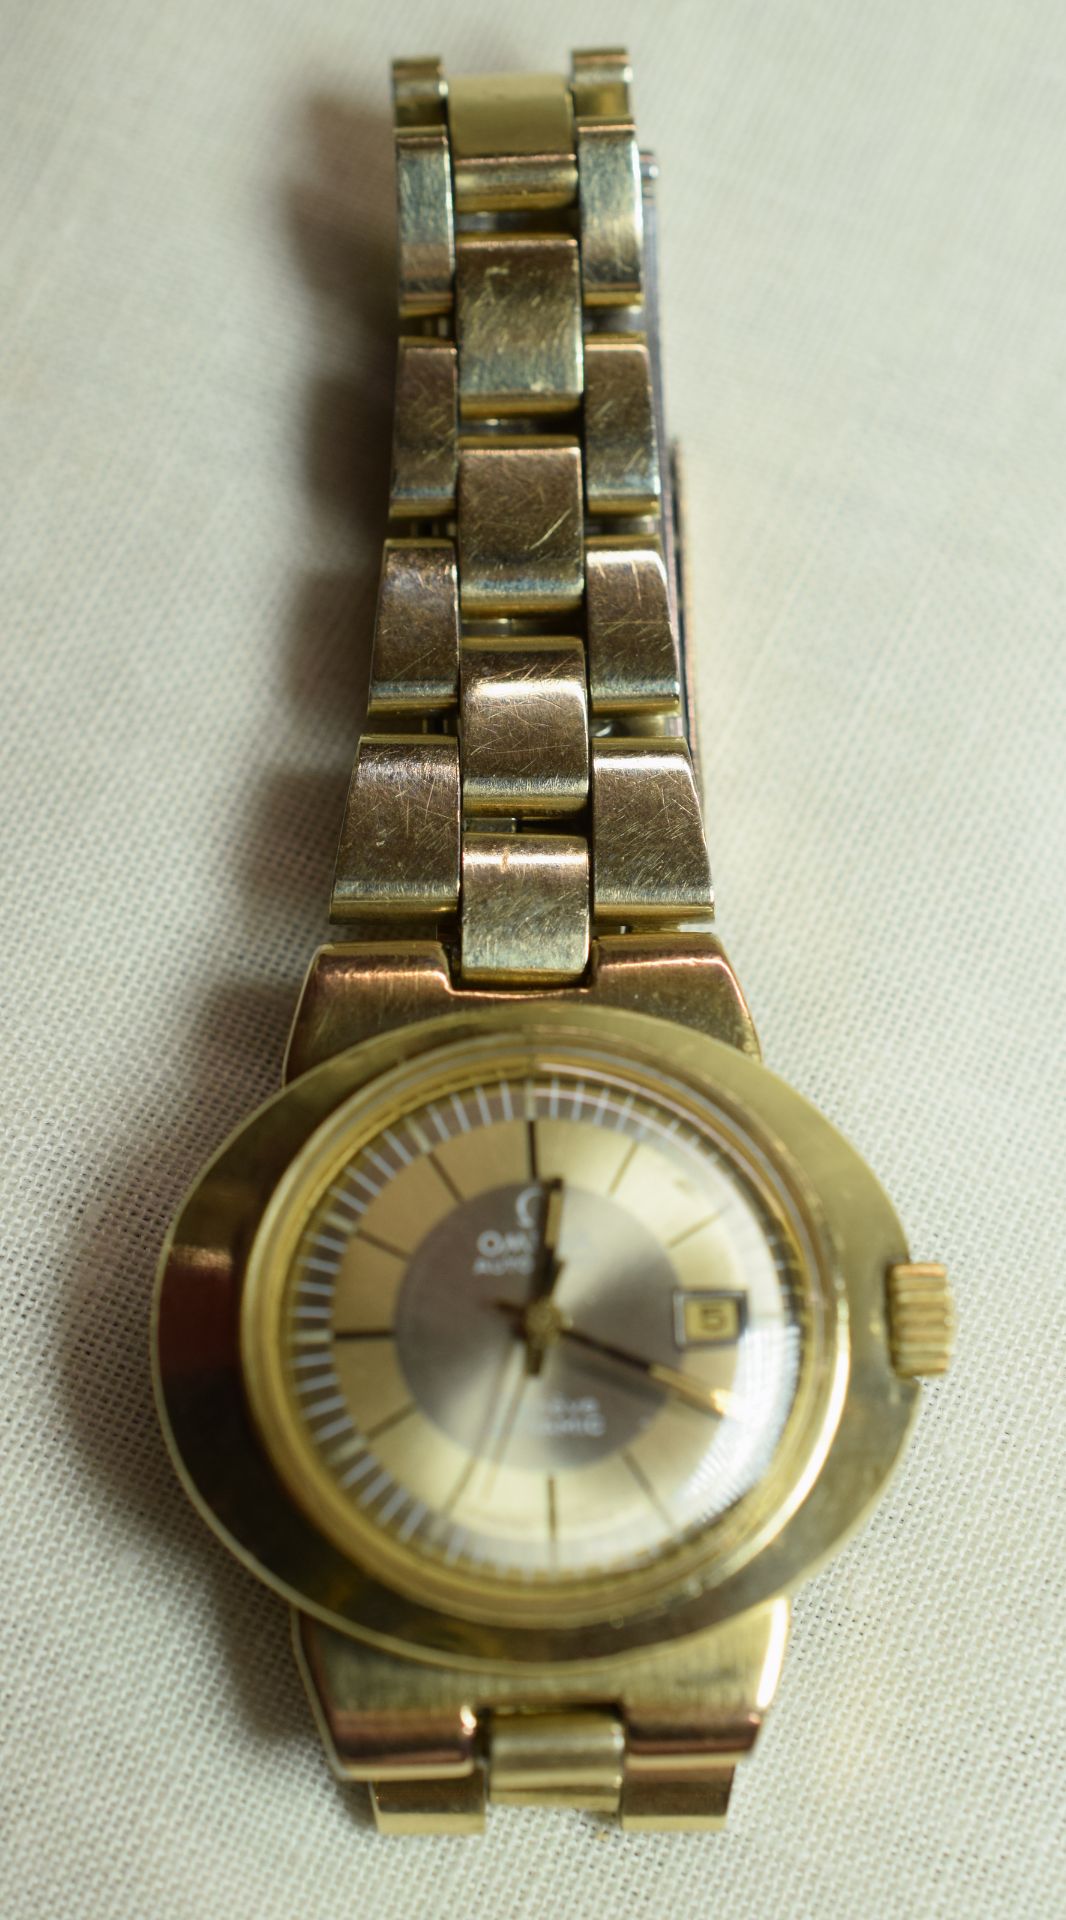 Omega Dynamic Lady's Automatic Watch On Bracelet - Image 4 of 6